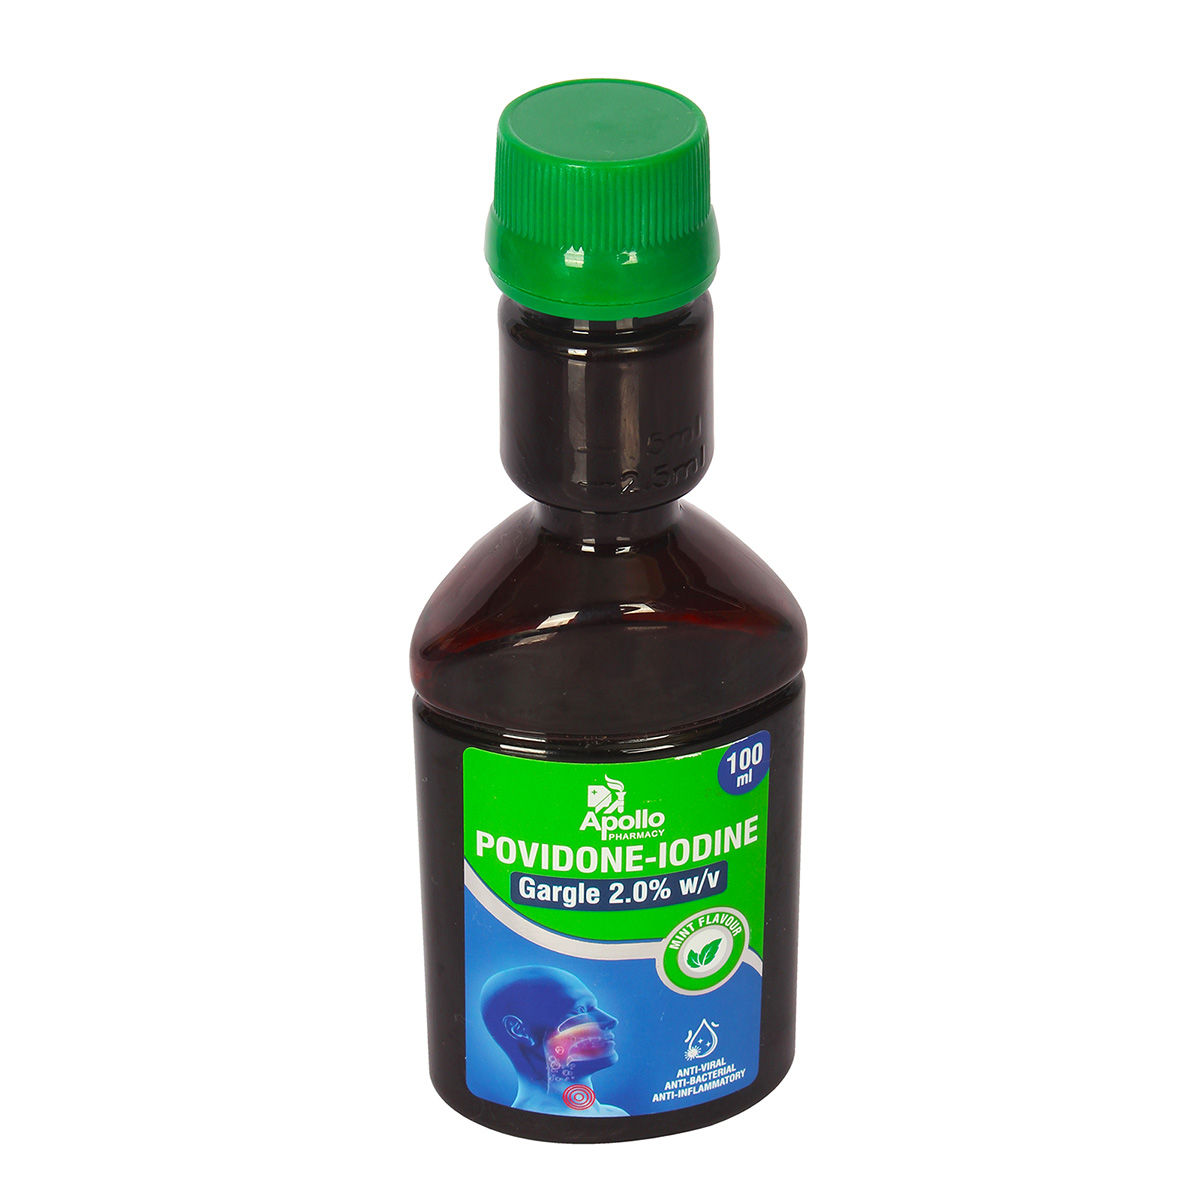 Apollo Pharmacy Povidone Iodine 2% W/V Gargle, 100 ml, Pack of 1 GARGLE